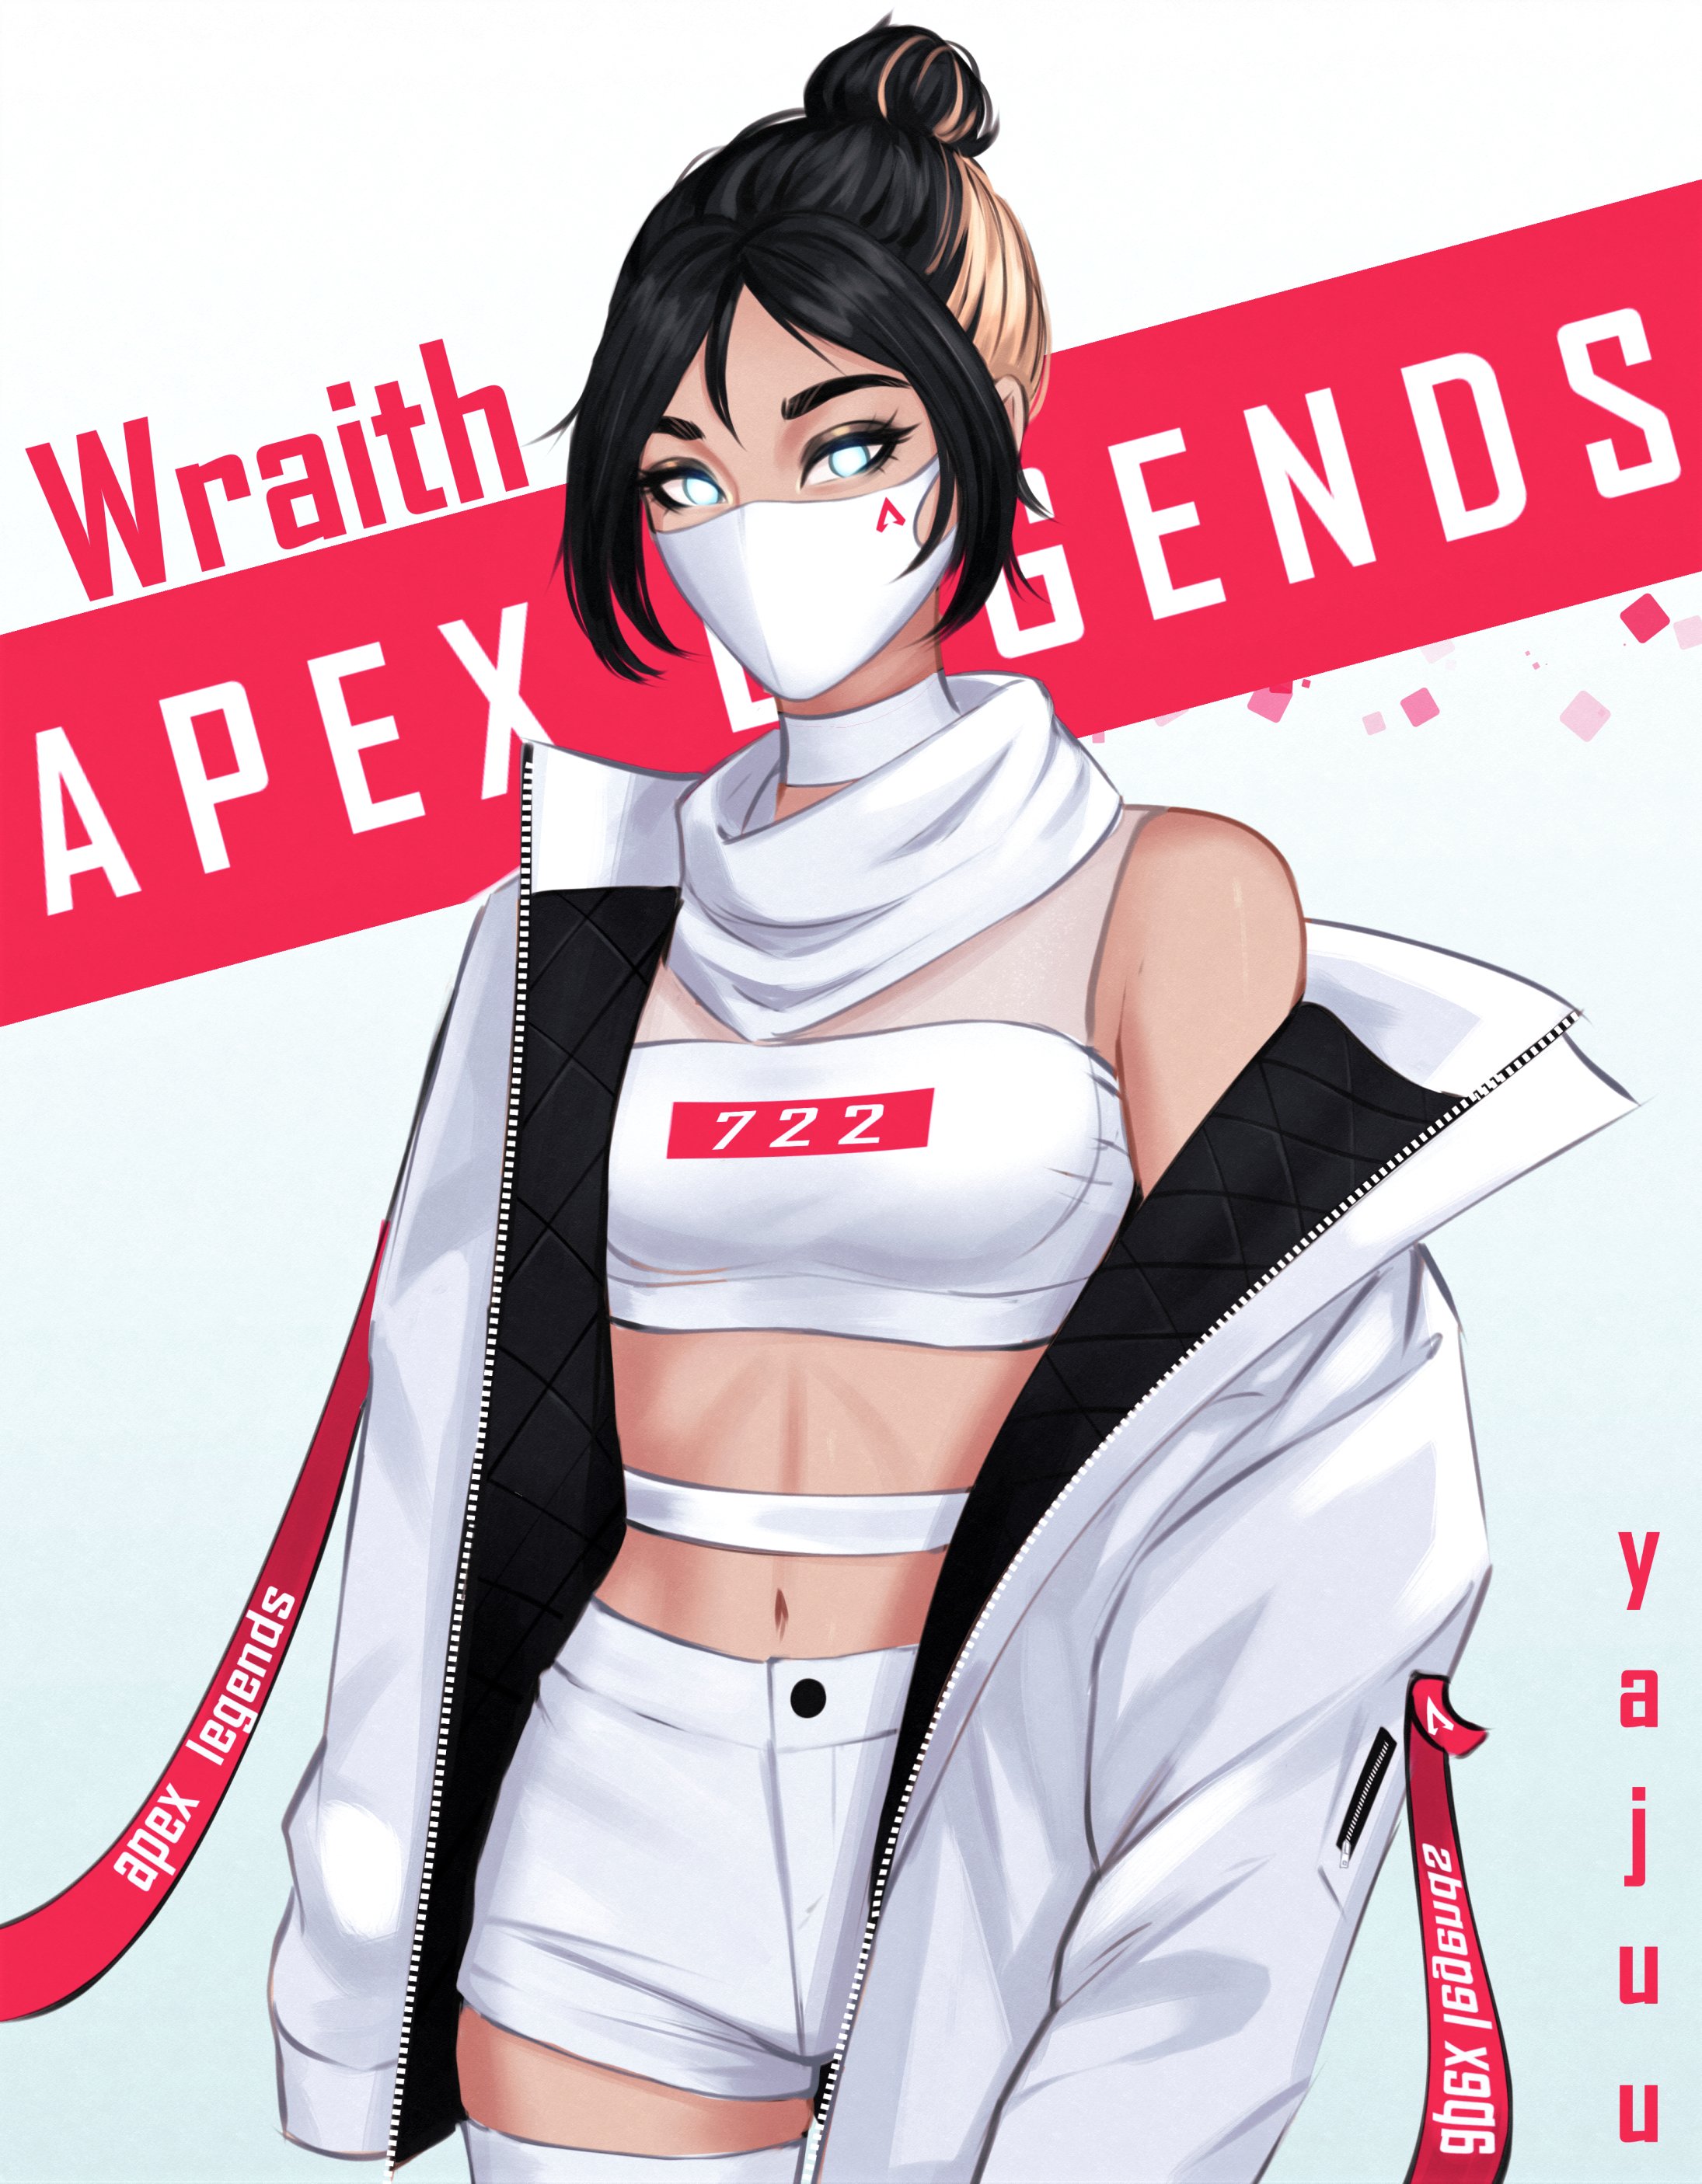 Yajuu Wraith Apex Legends Video Game Girls Video Game Characters Women Dark Hair Blonde 5710